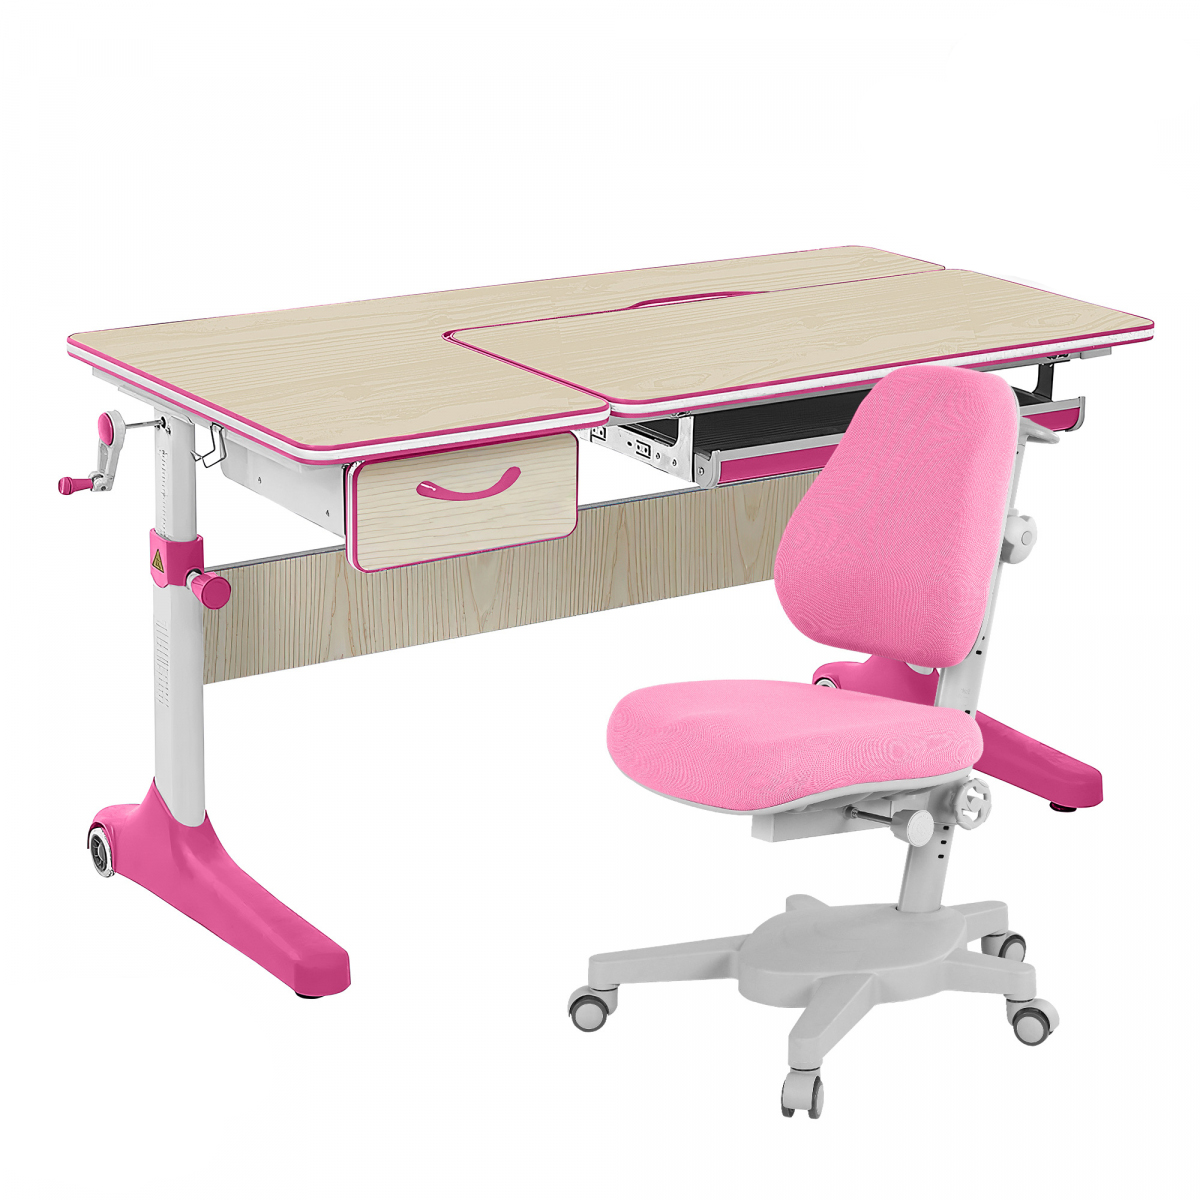 Комплект парта Anatomica Uniqa Lite клен/розовый с розовым креслом Armata комплект anatomica парта genius клен розовый с розовым креслом figra